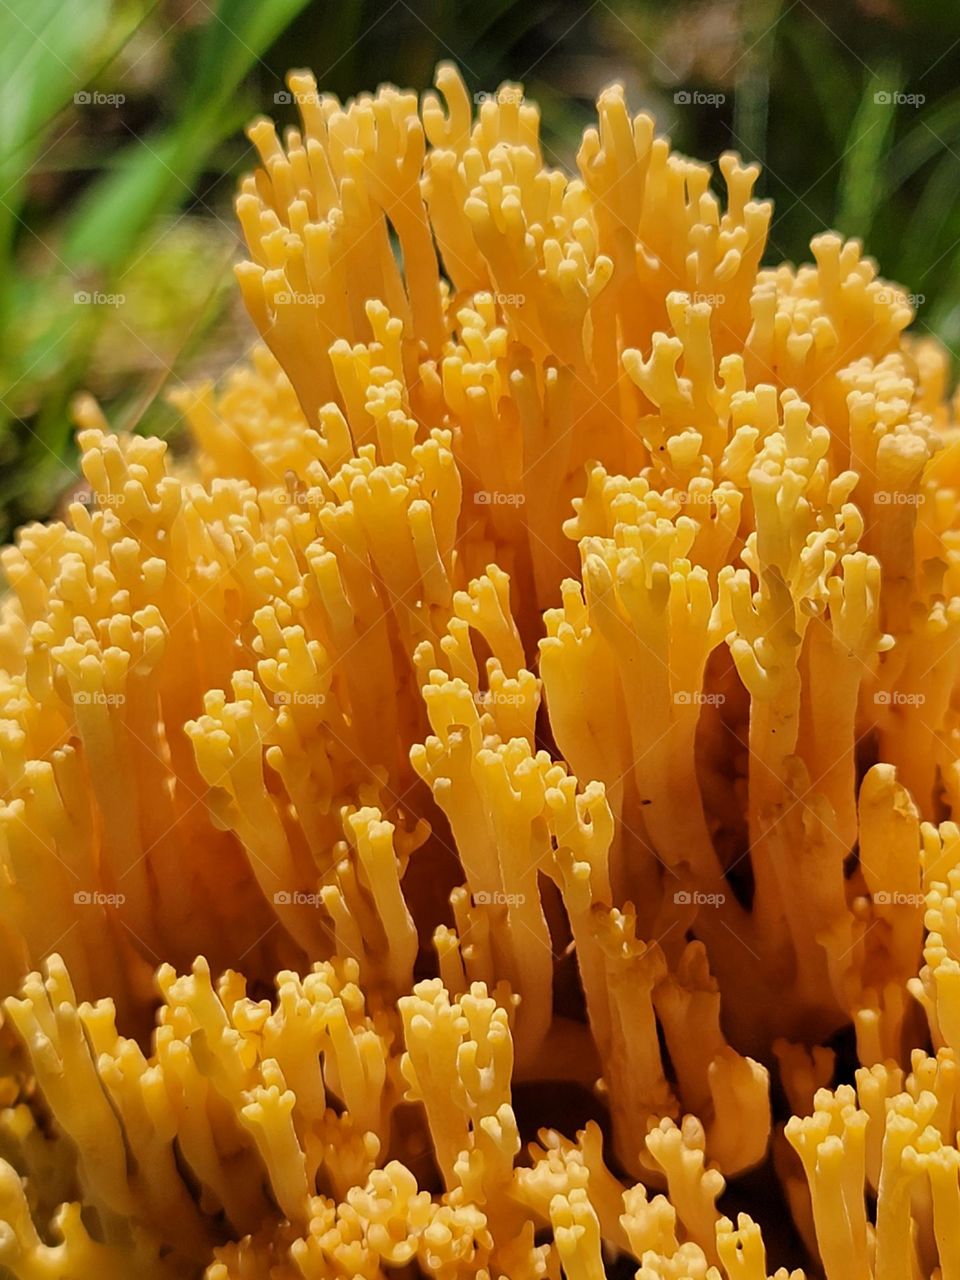 Wild Orange Coral Fungus Found on a Hike